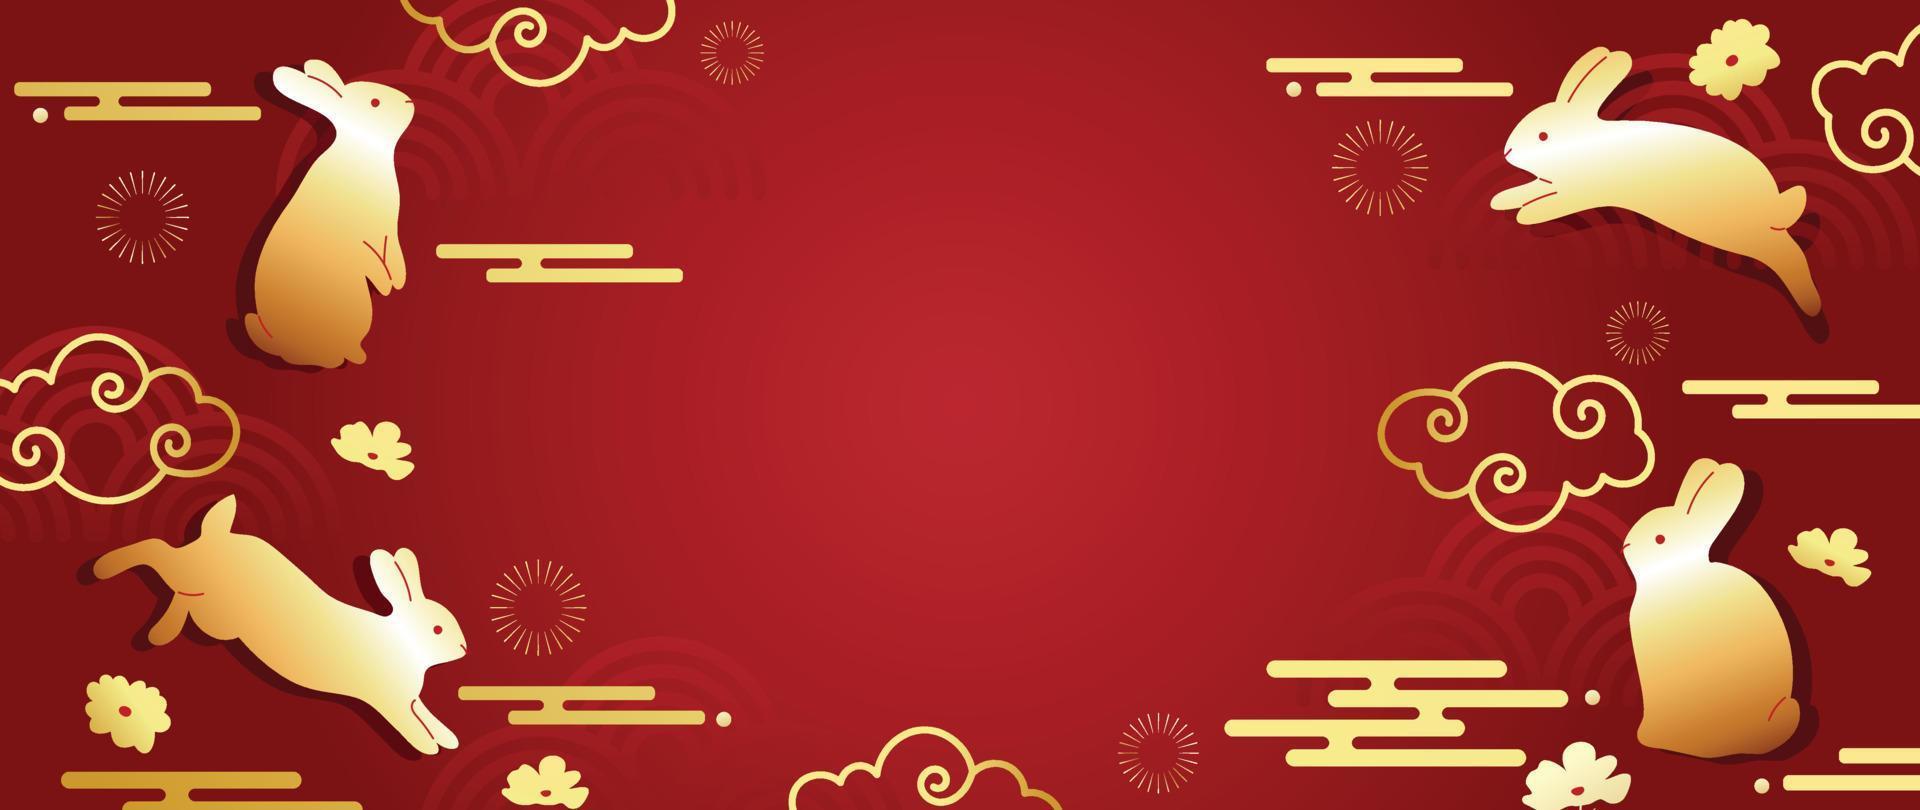 orientalisk japansk och kinesisk lyx stil mönster bakgrund vektor. traditionell gyllene lekfull kanin, moln, blomma och kinesisk mönster bakgrund. design illustration för tapet, kort, affisch. vektor